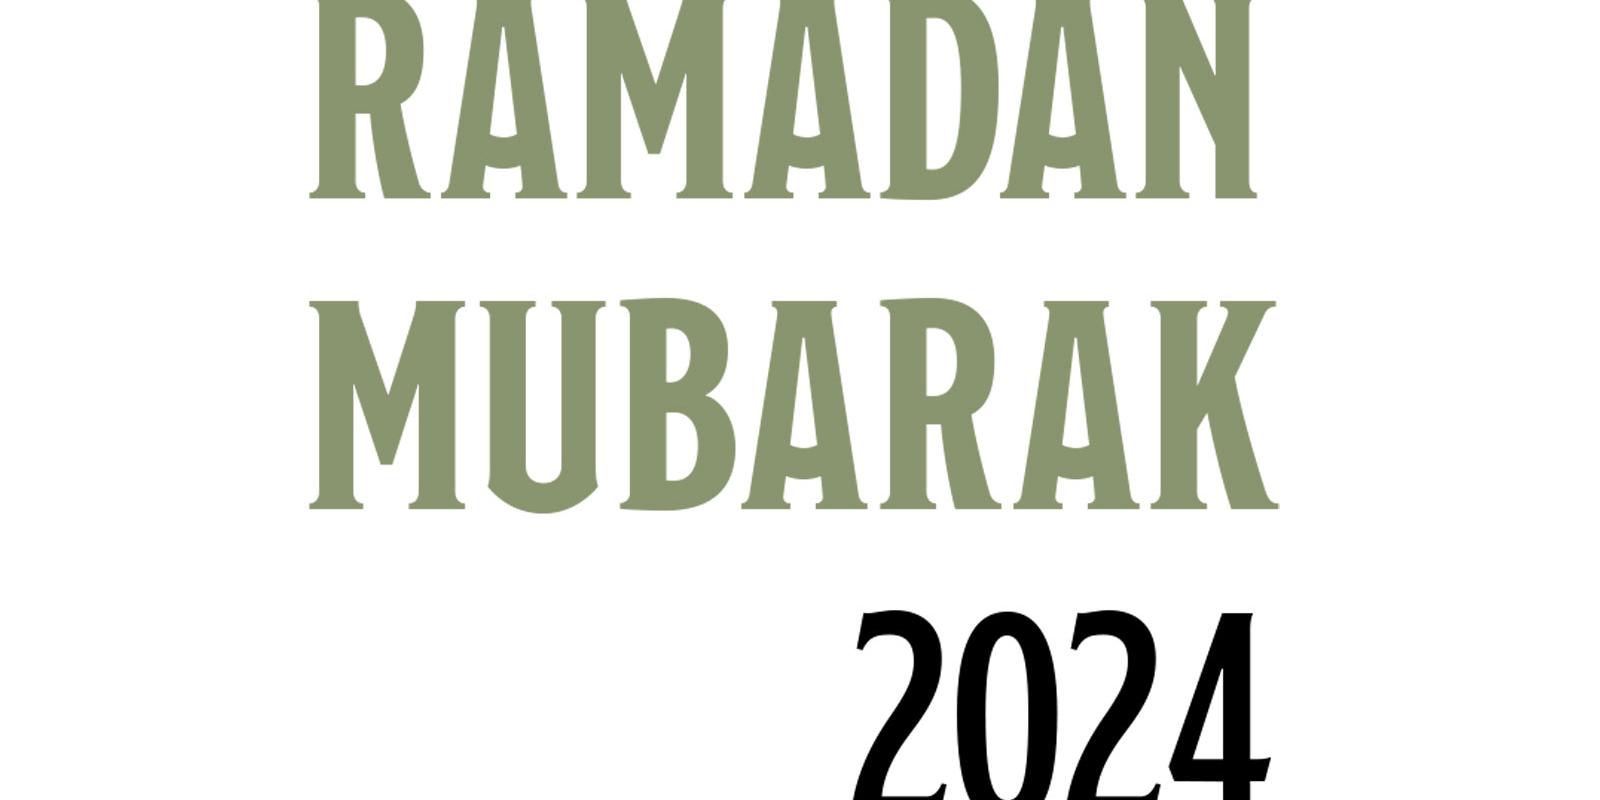 Grußwort zu Ramadan 2024